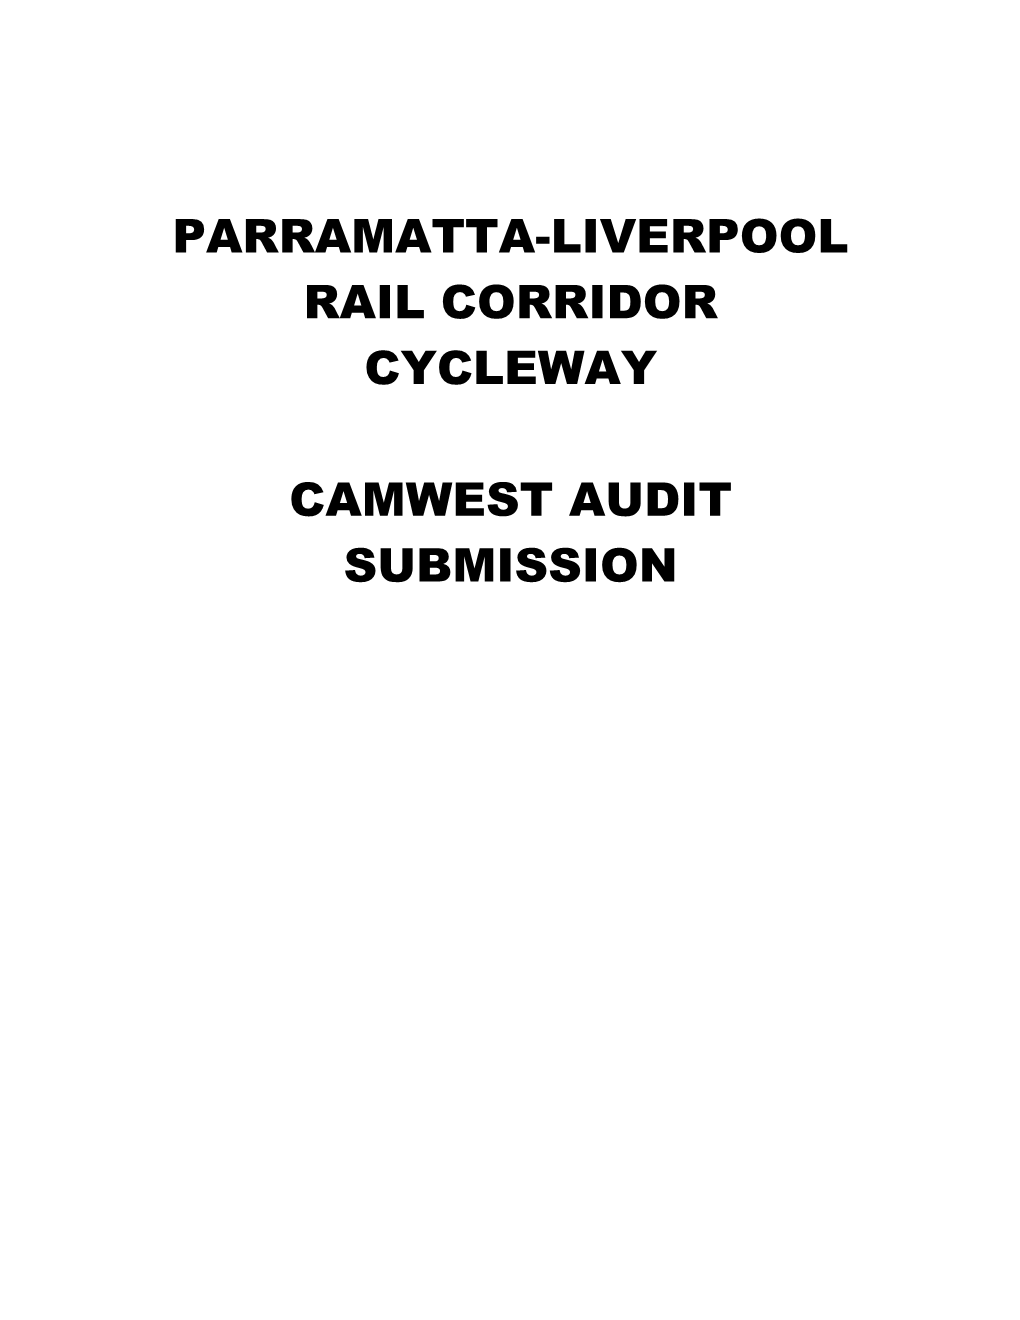 Parramatta-Liverpool Rail Corridor Cycleway